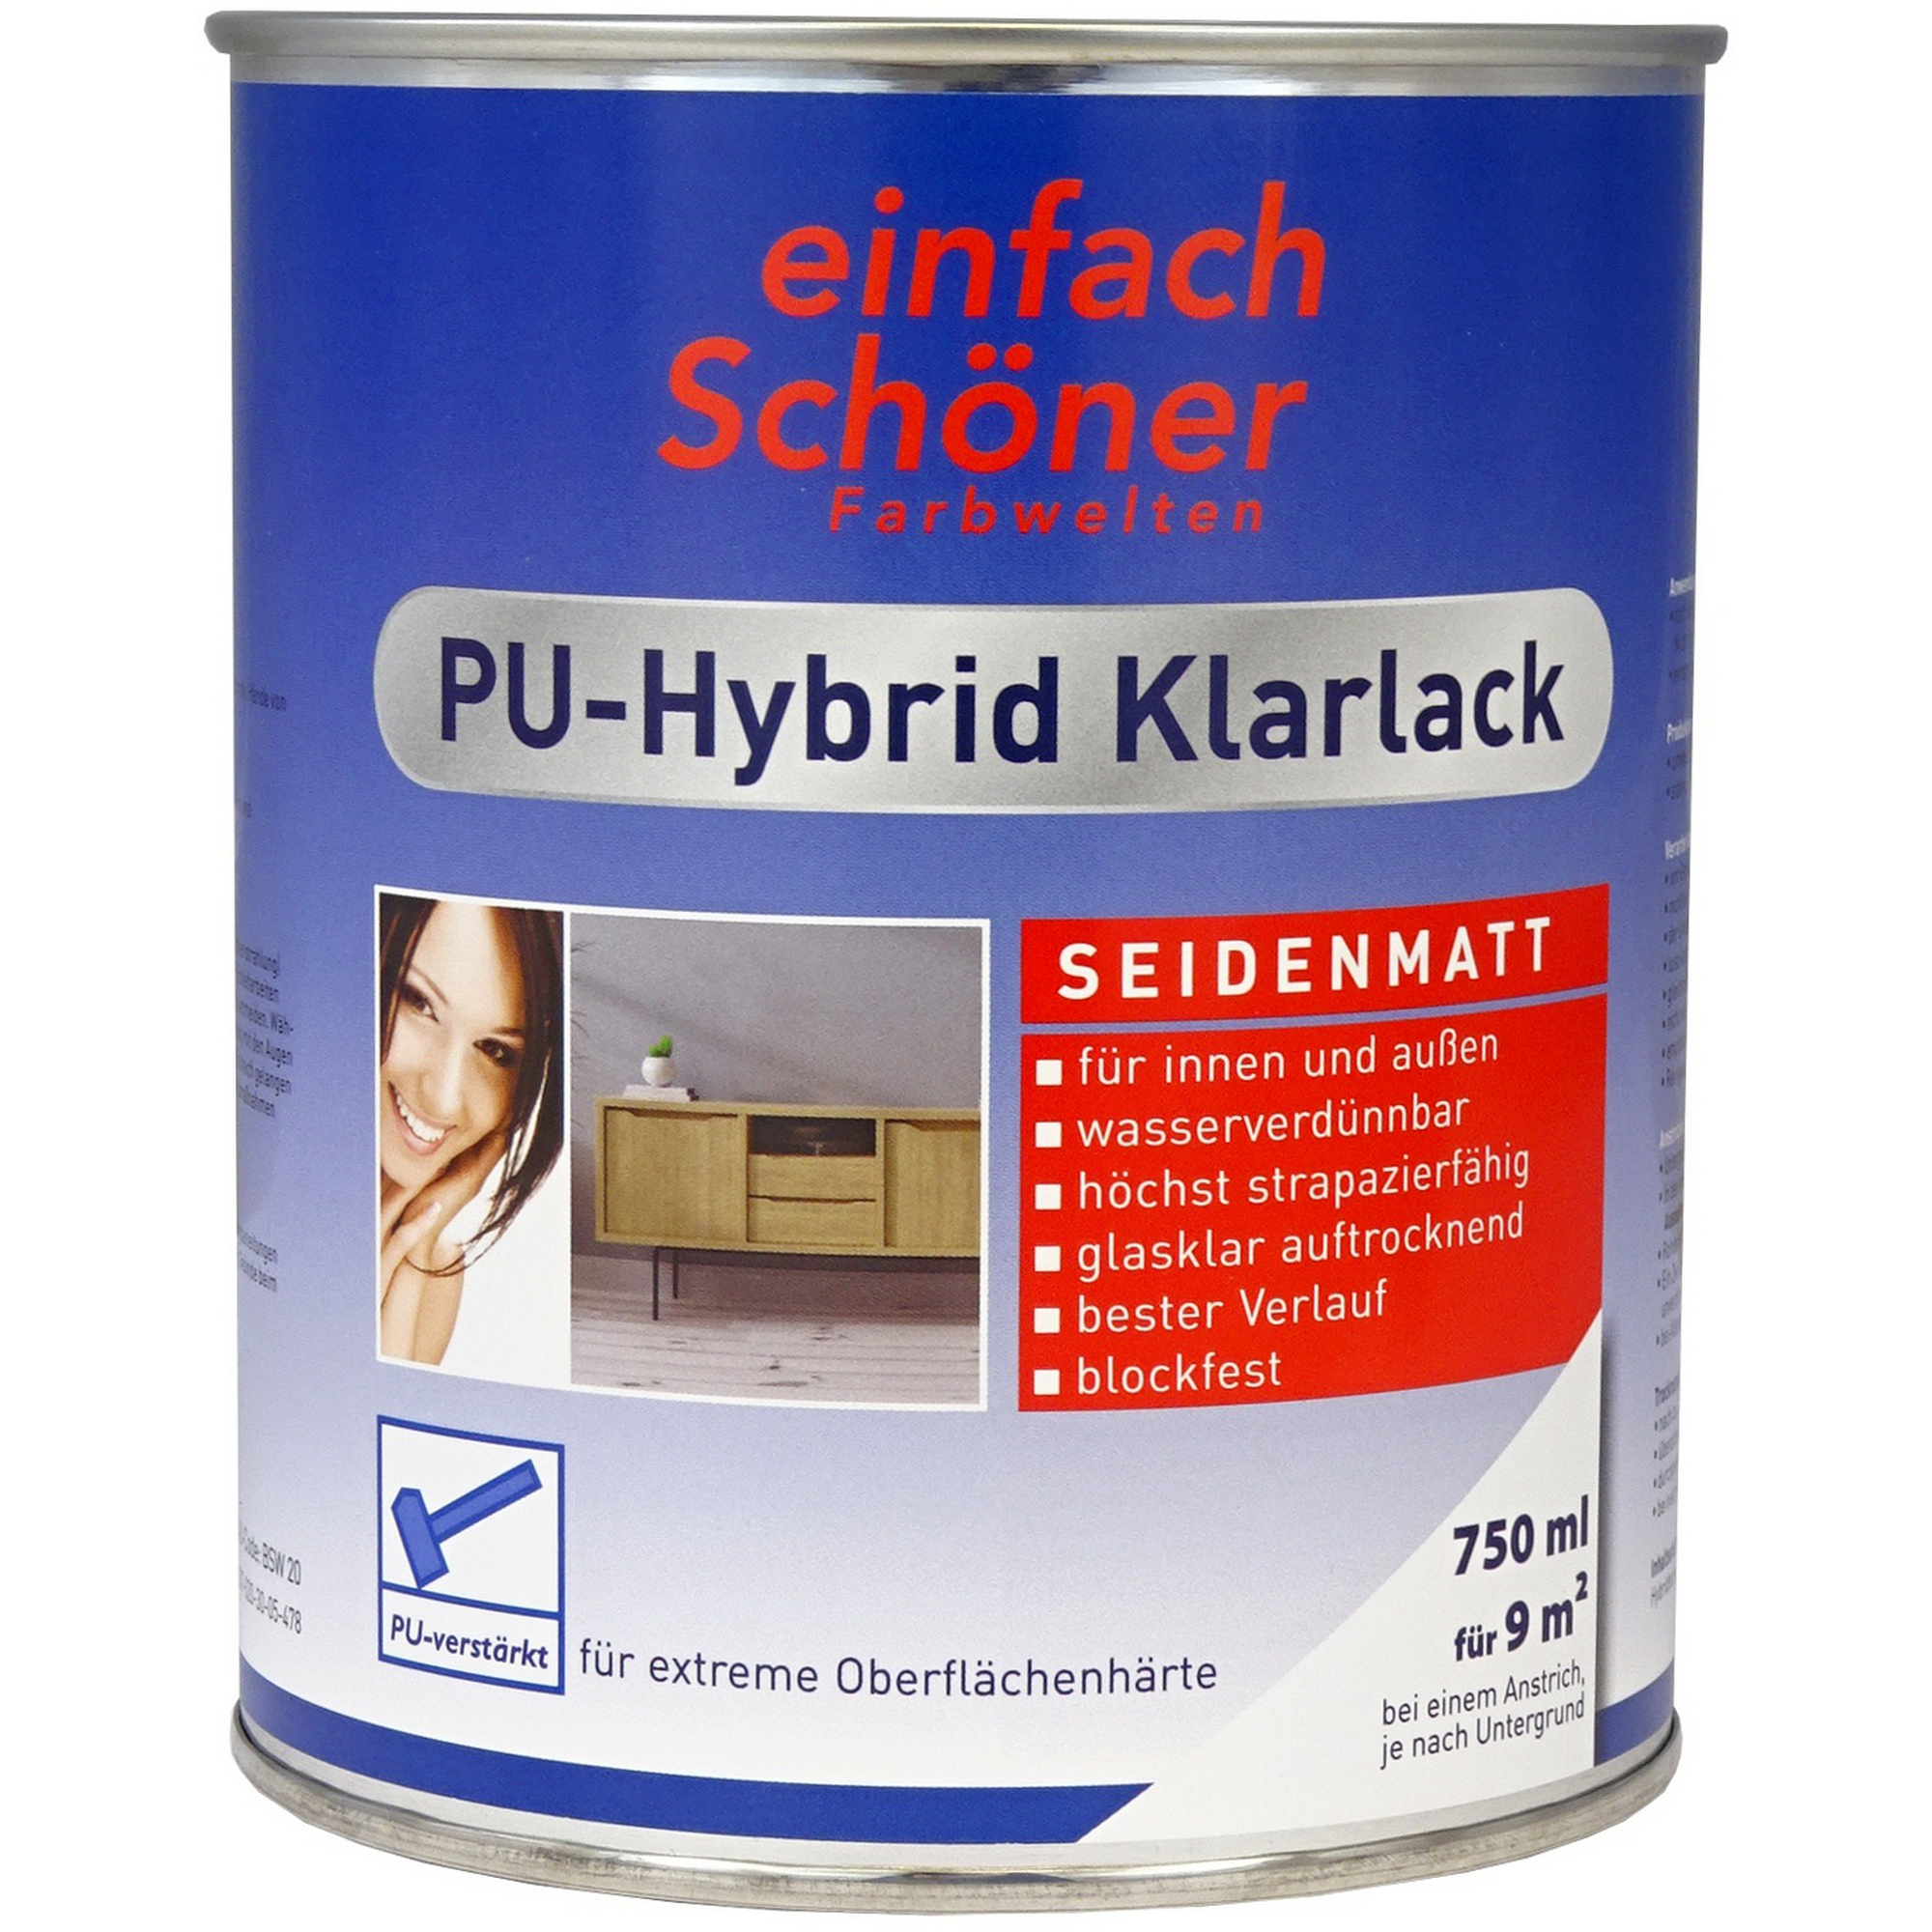 PU-Hybrid Klarlack seidenmatt 750 ml + product picture